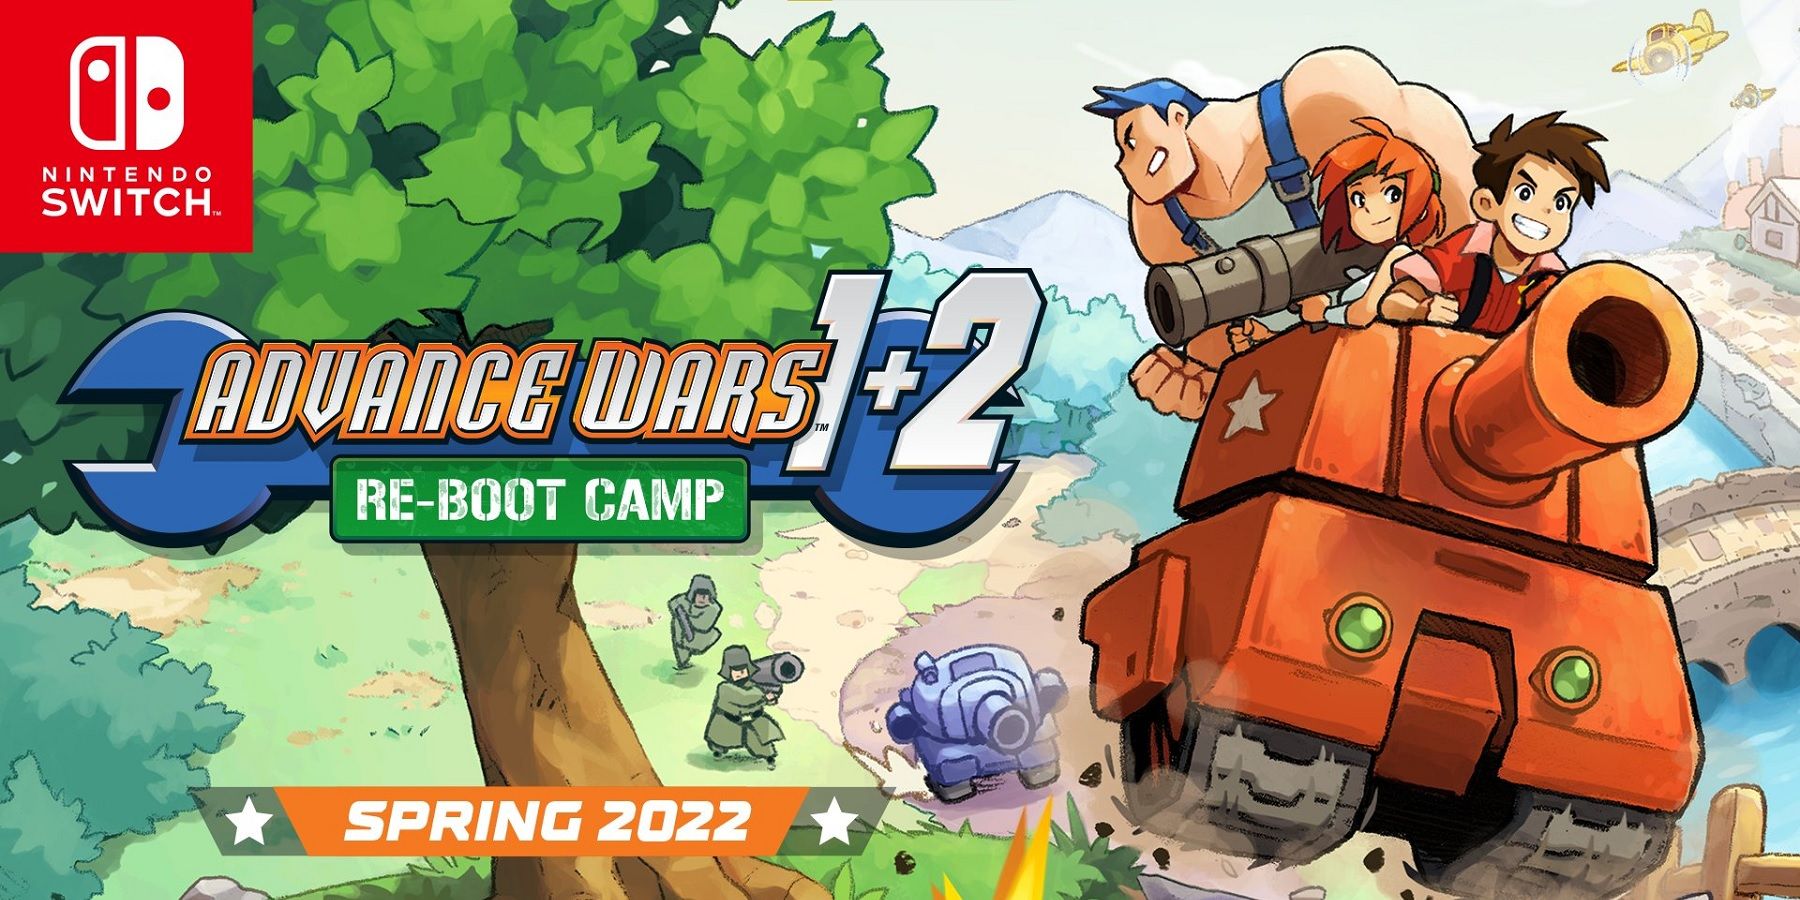 Spring 2022 release date Advance Wars Remake